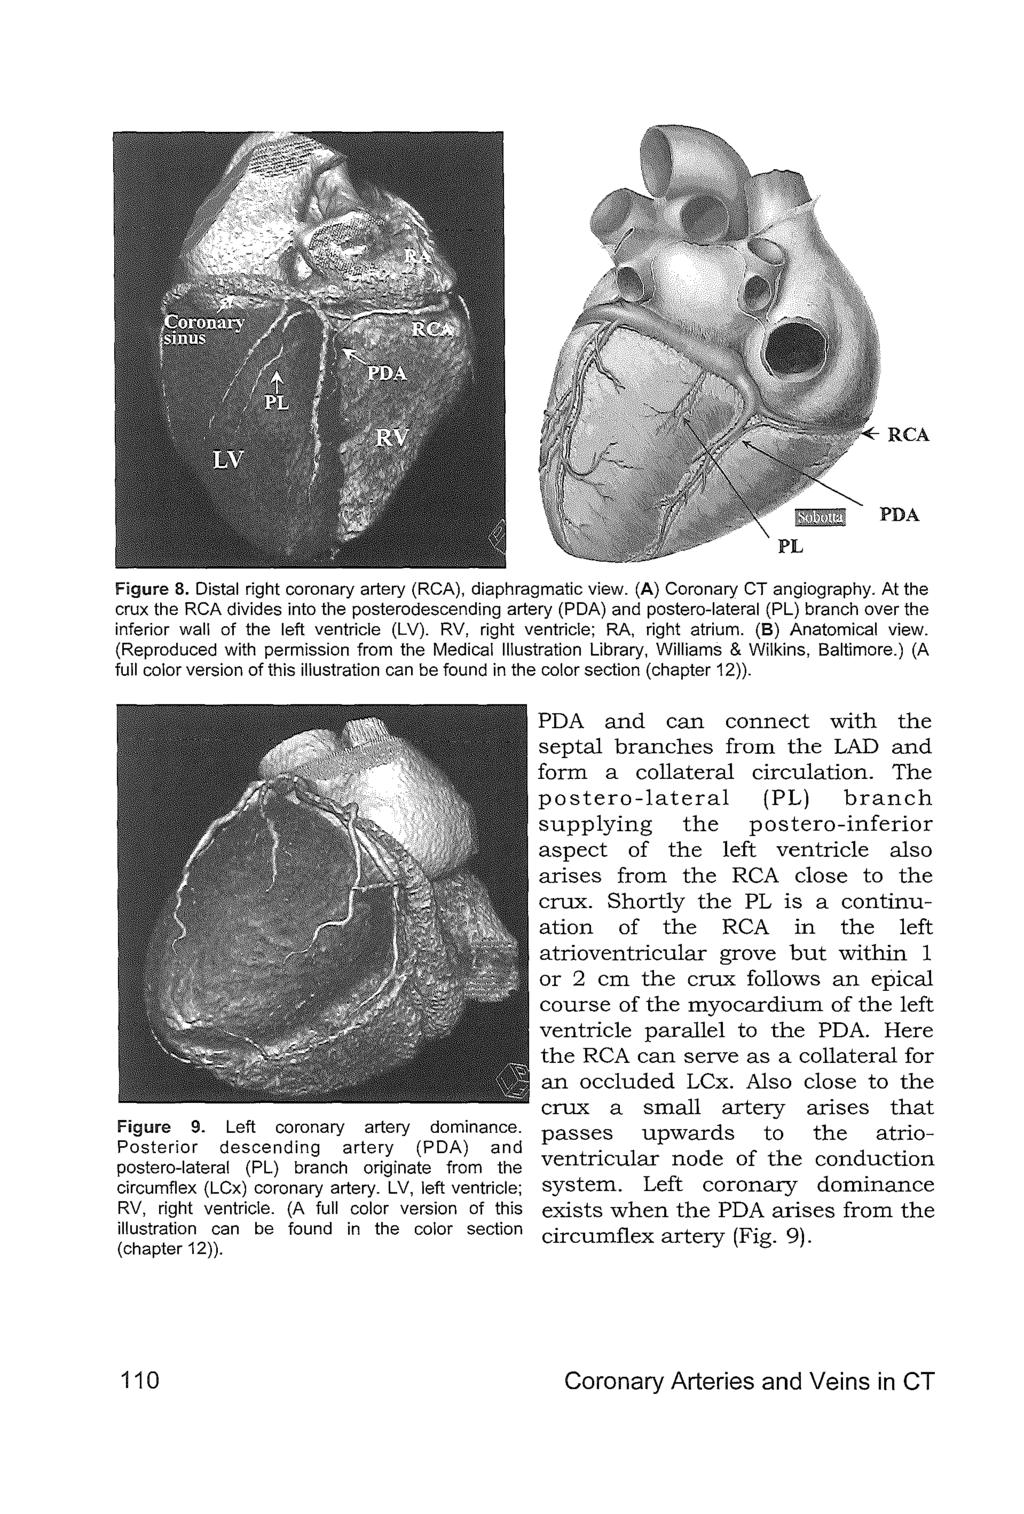 RCA Figure 8. Distal right coronary artery (RCA), diaphragmatic view. (A) Coronary CT angiography.